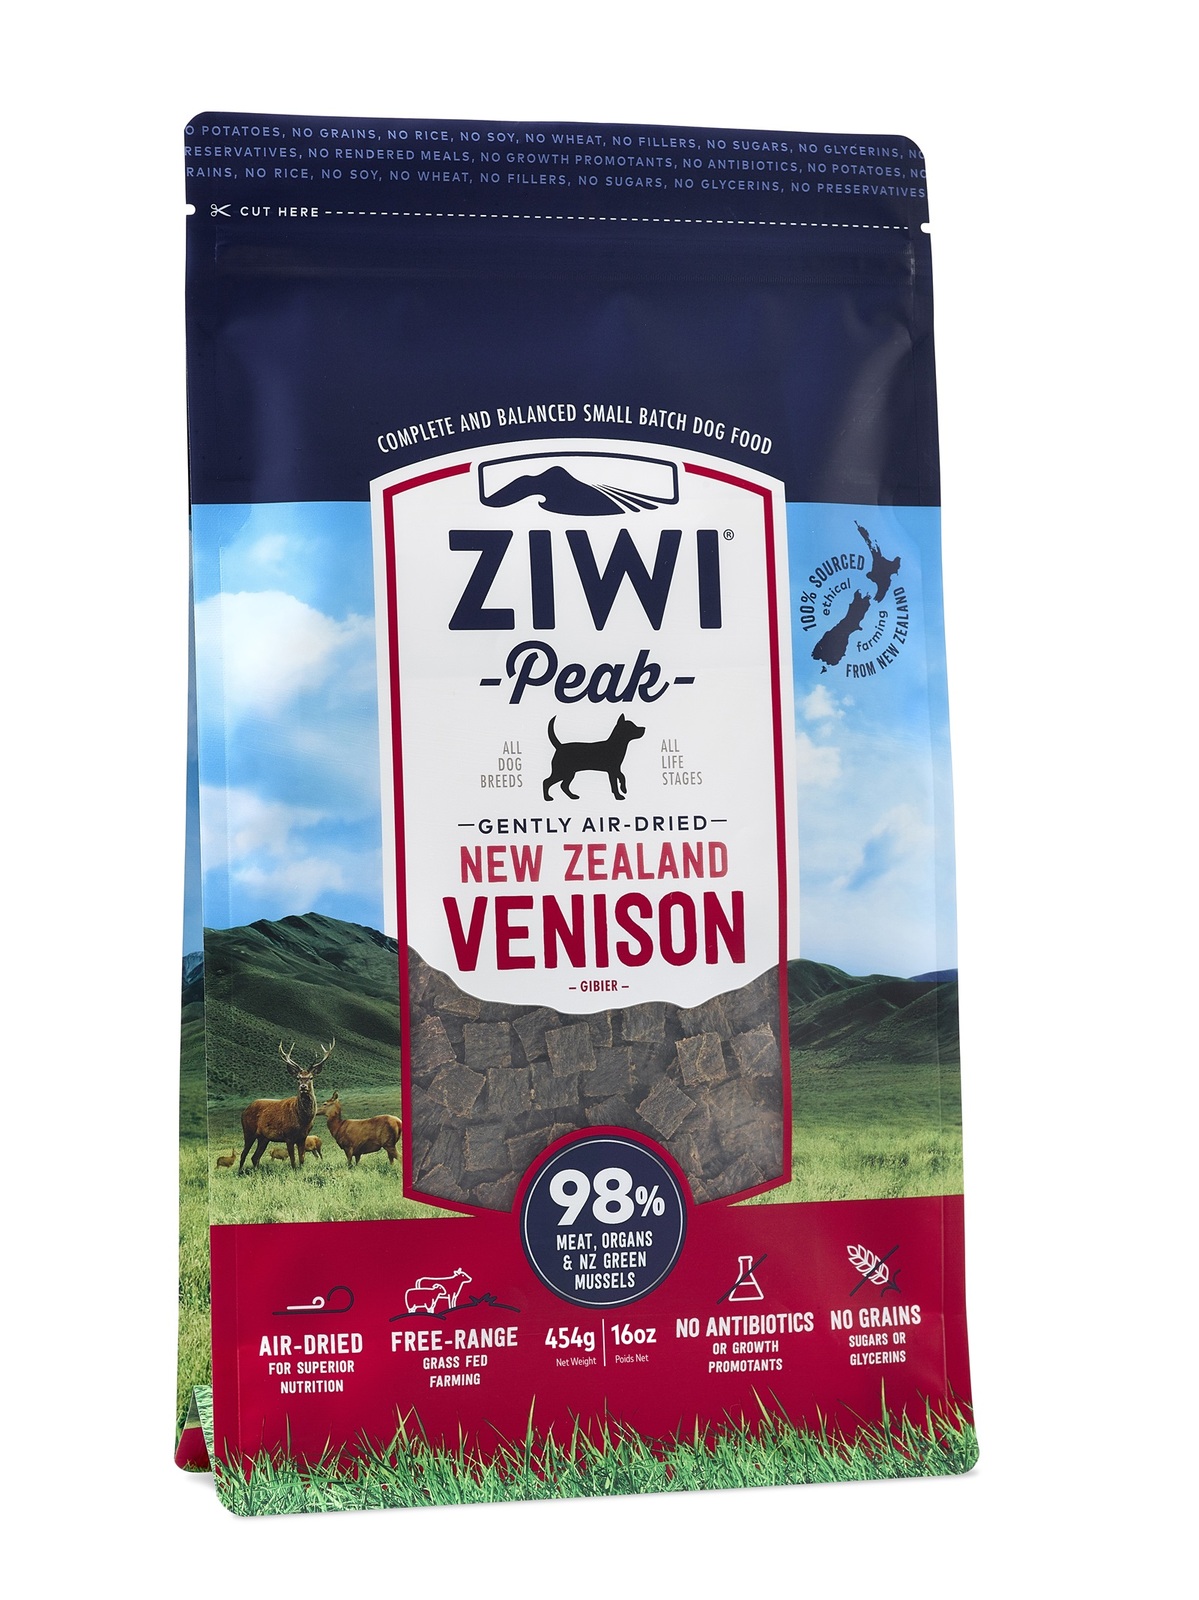 Ziwi Peak Air Dried Grain Free Dog Food 454g Pouch - Venison image 0